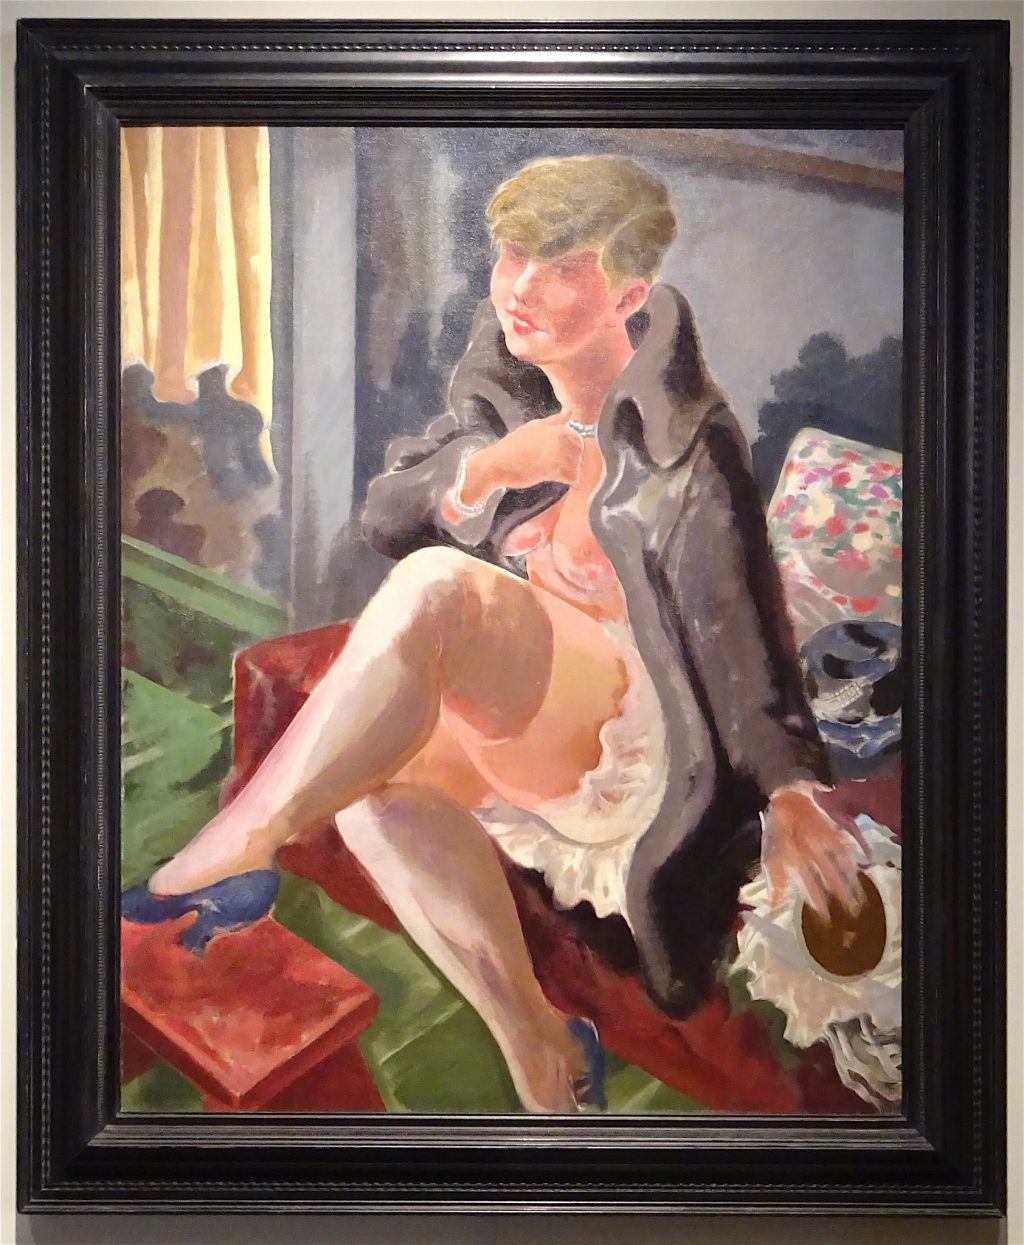 George Grosz “Seated Girl (Lotte Schmalhausen)” 1928 100 x 79.5 cm @ Richard Nagy